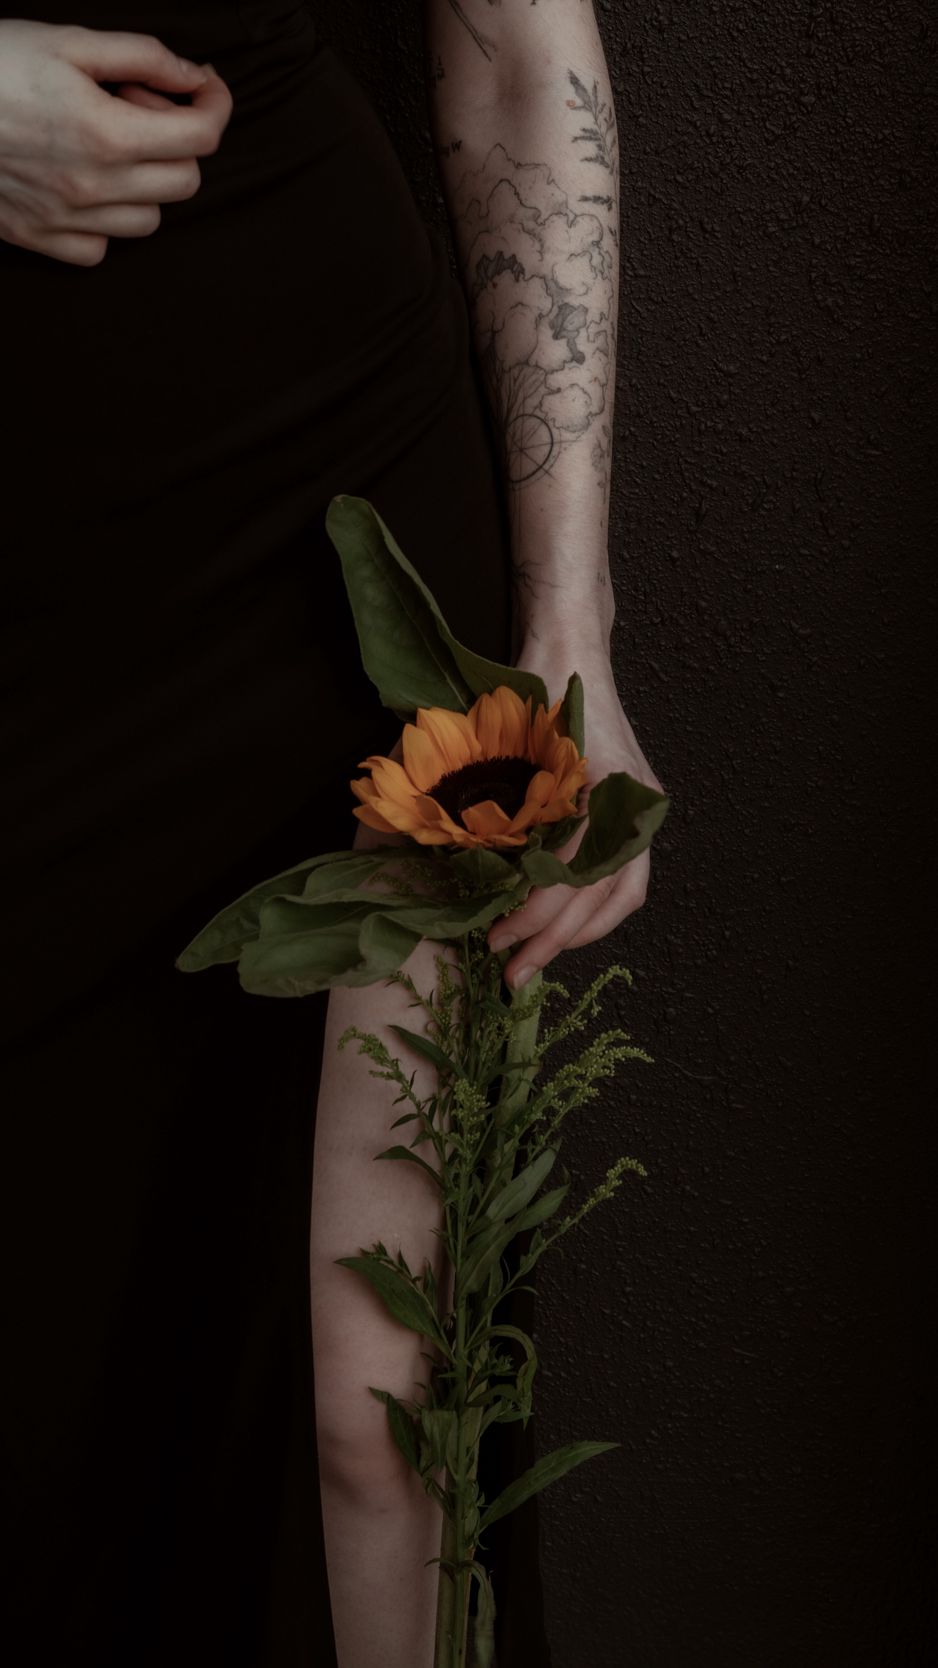 100,000 Flowers tattoo Vector Images | Depositphotos